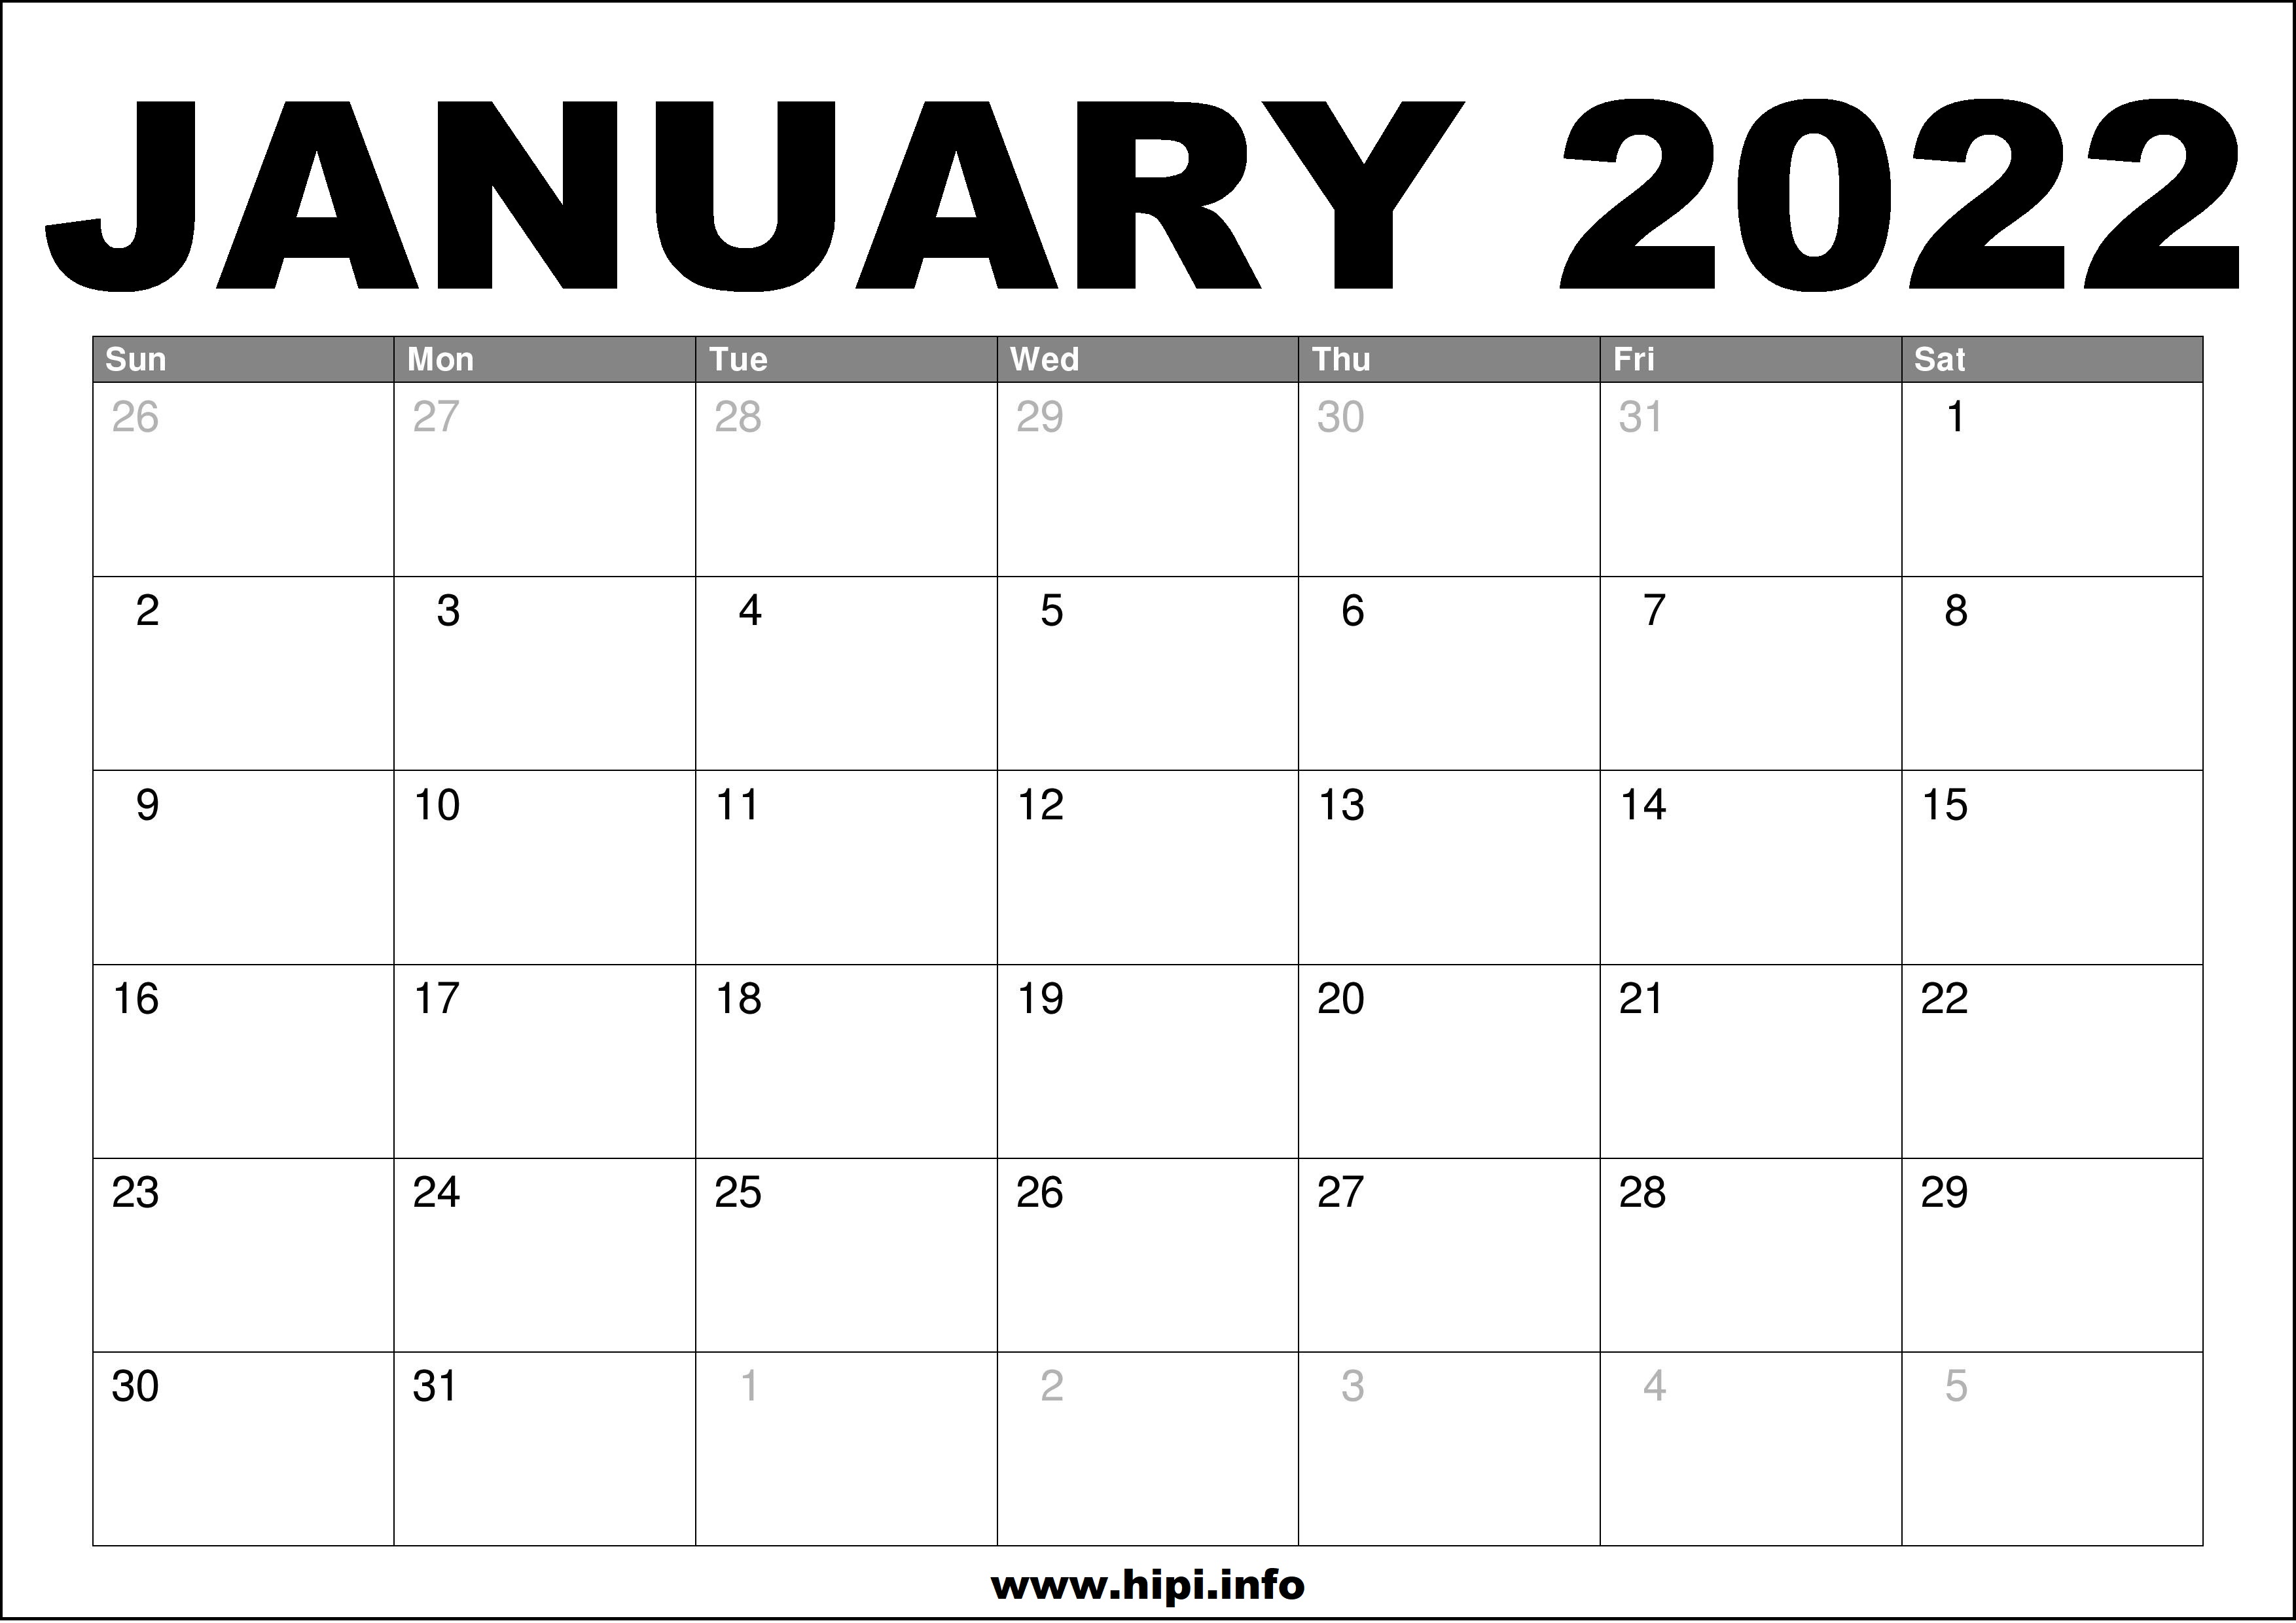 Free January 2022 Printable Calendar January 2022 Calendar Printable Free - Hipi.info | Calendars Printable Free